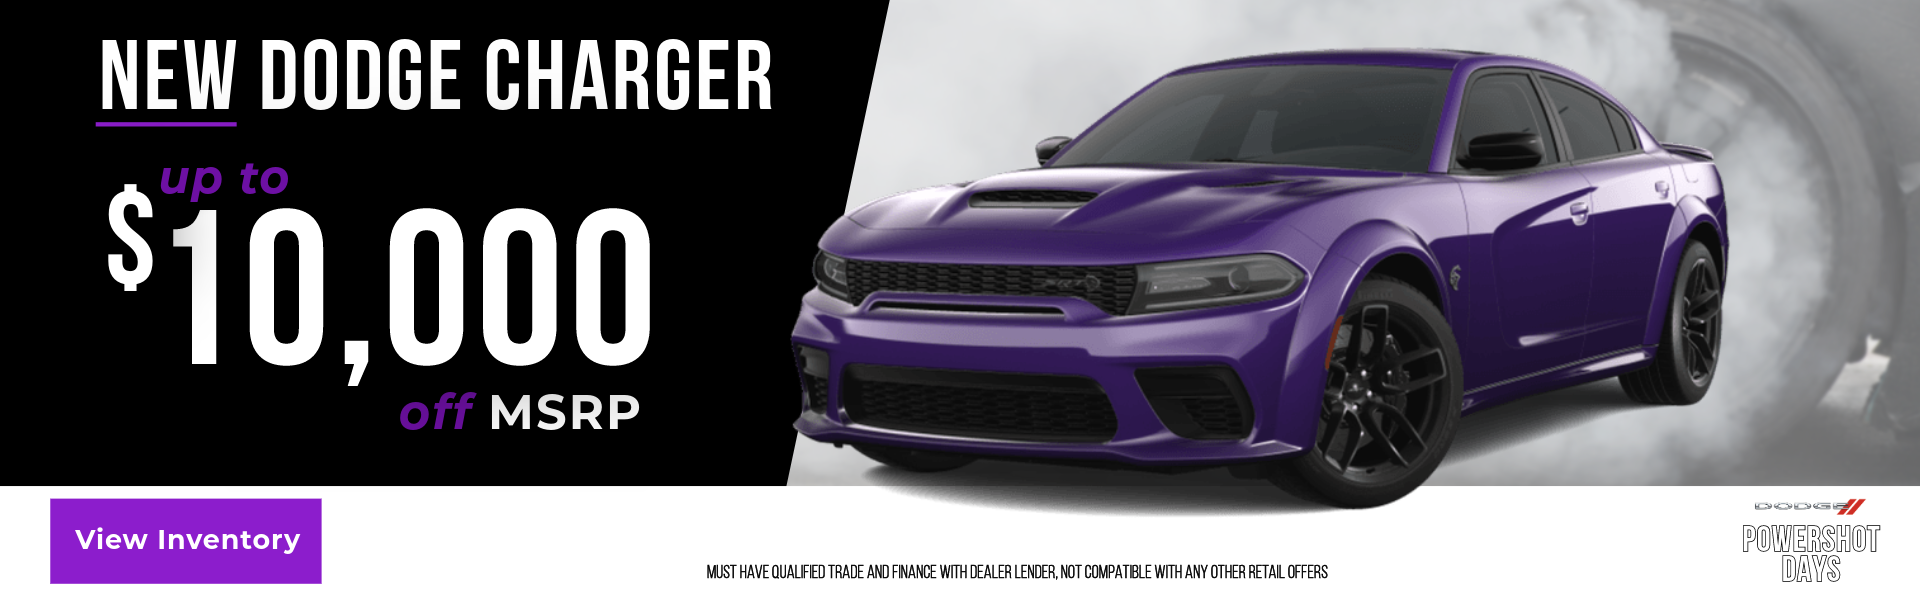 View New Dodge Charger Inventory at Briggs CDJR - Topeka